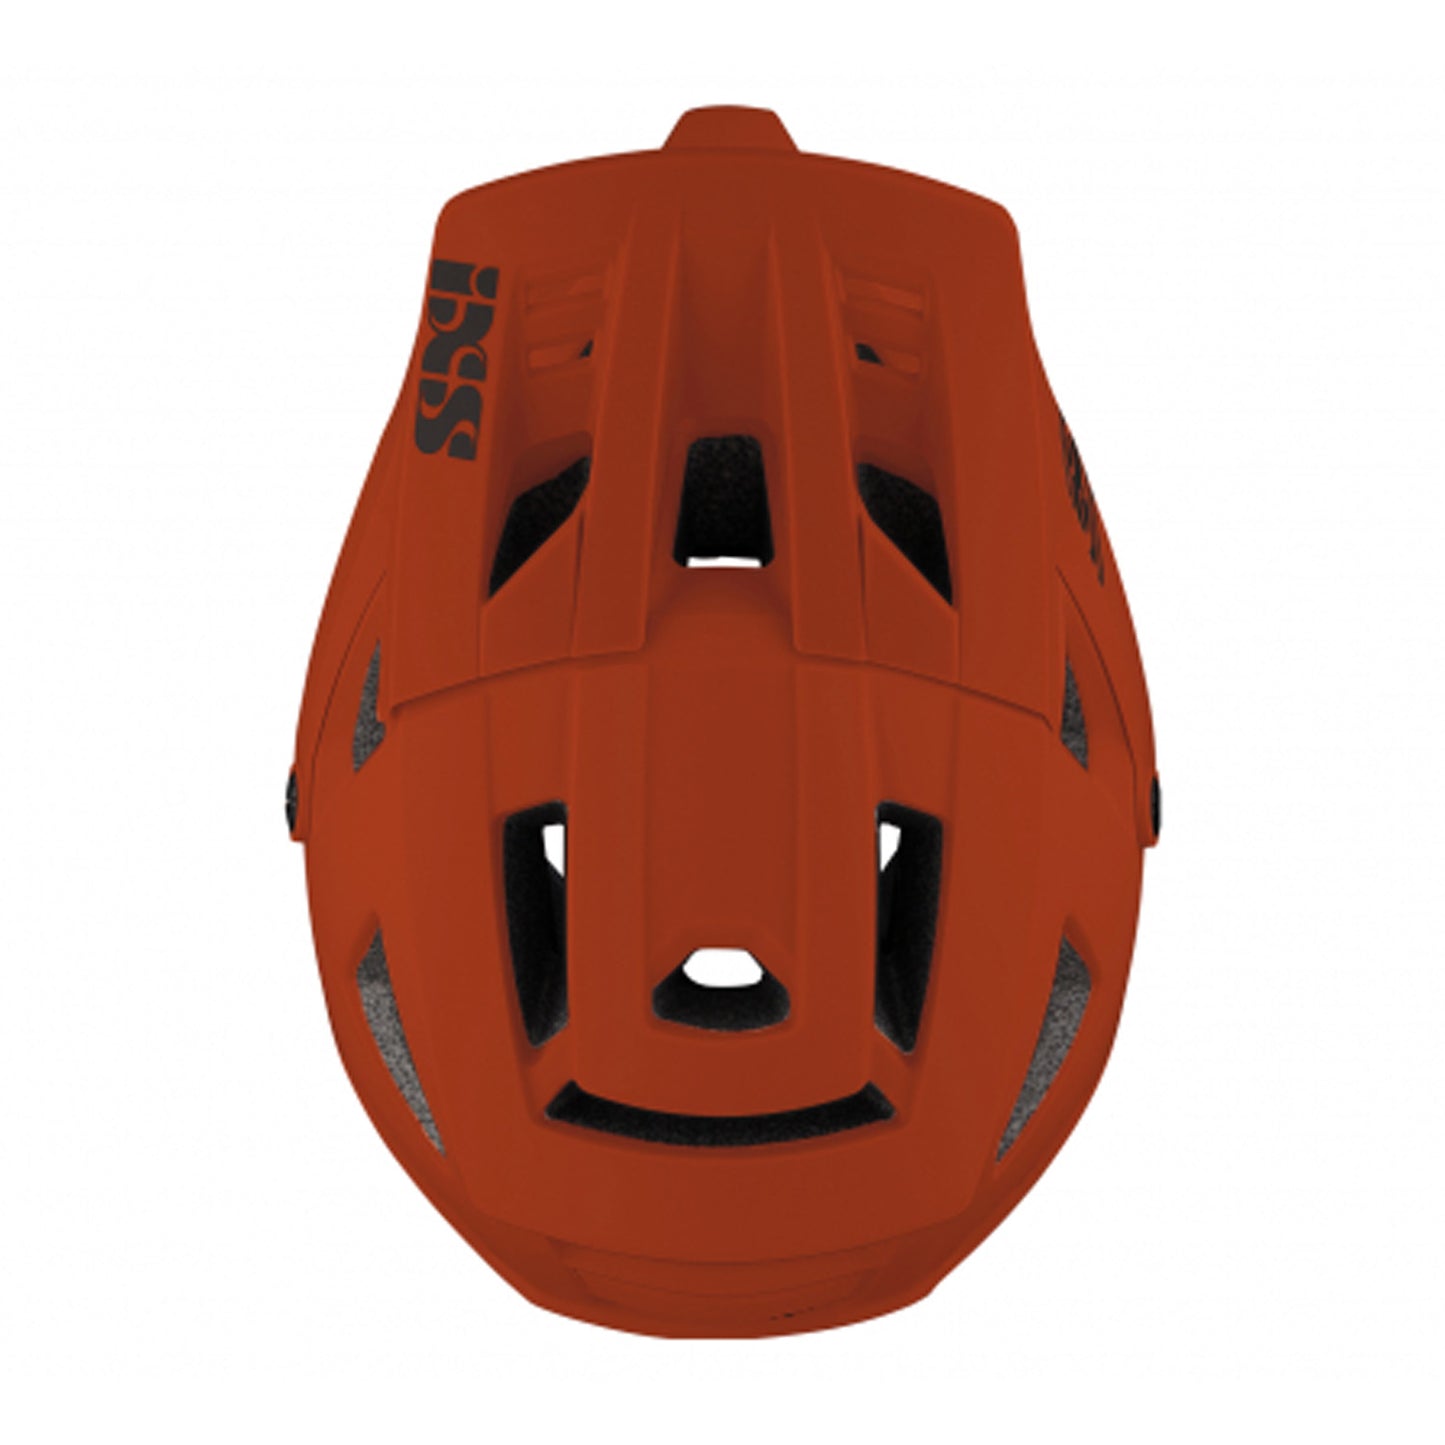 IXS Trigger FF MIPS Full Face MTB Helmet - Orange